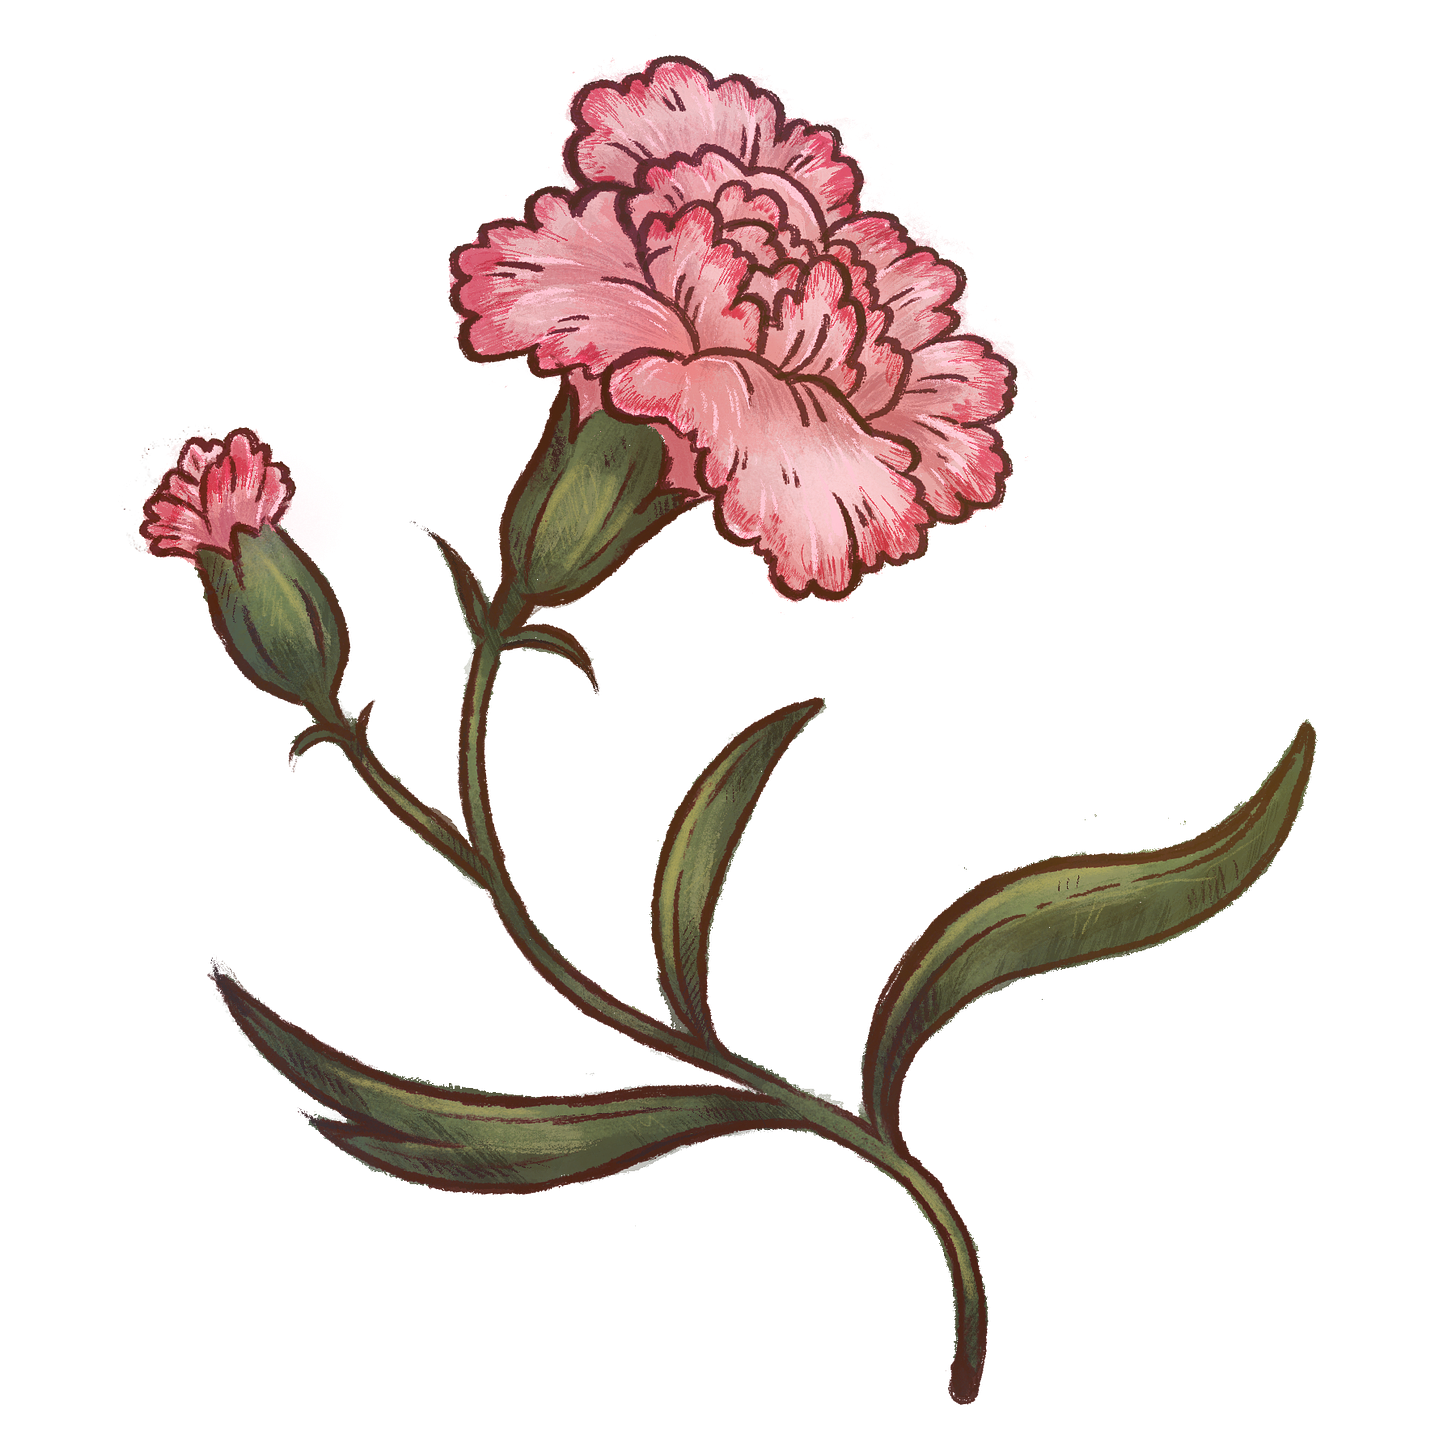 a digitally hand drawn illustration of a stylized pink carnation